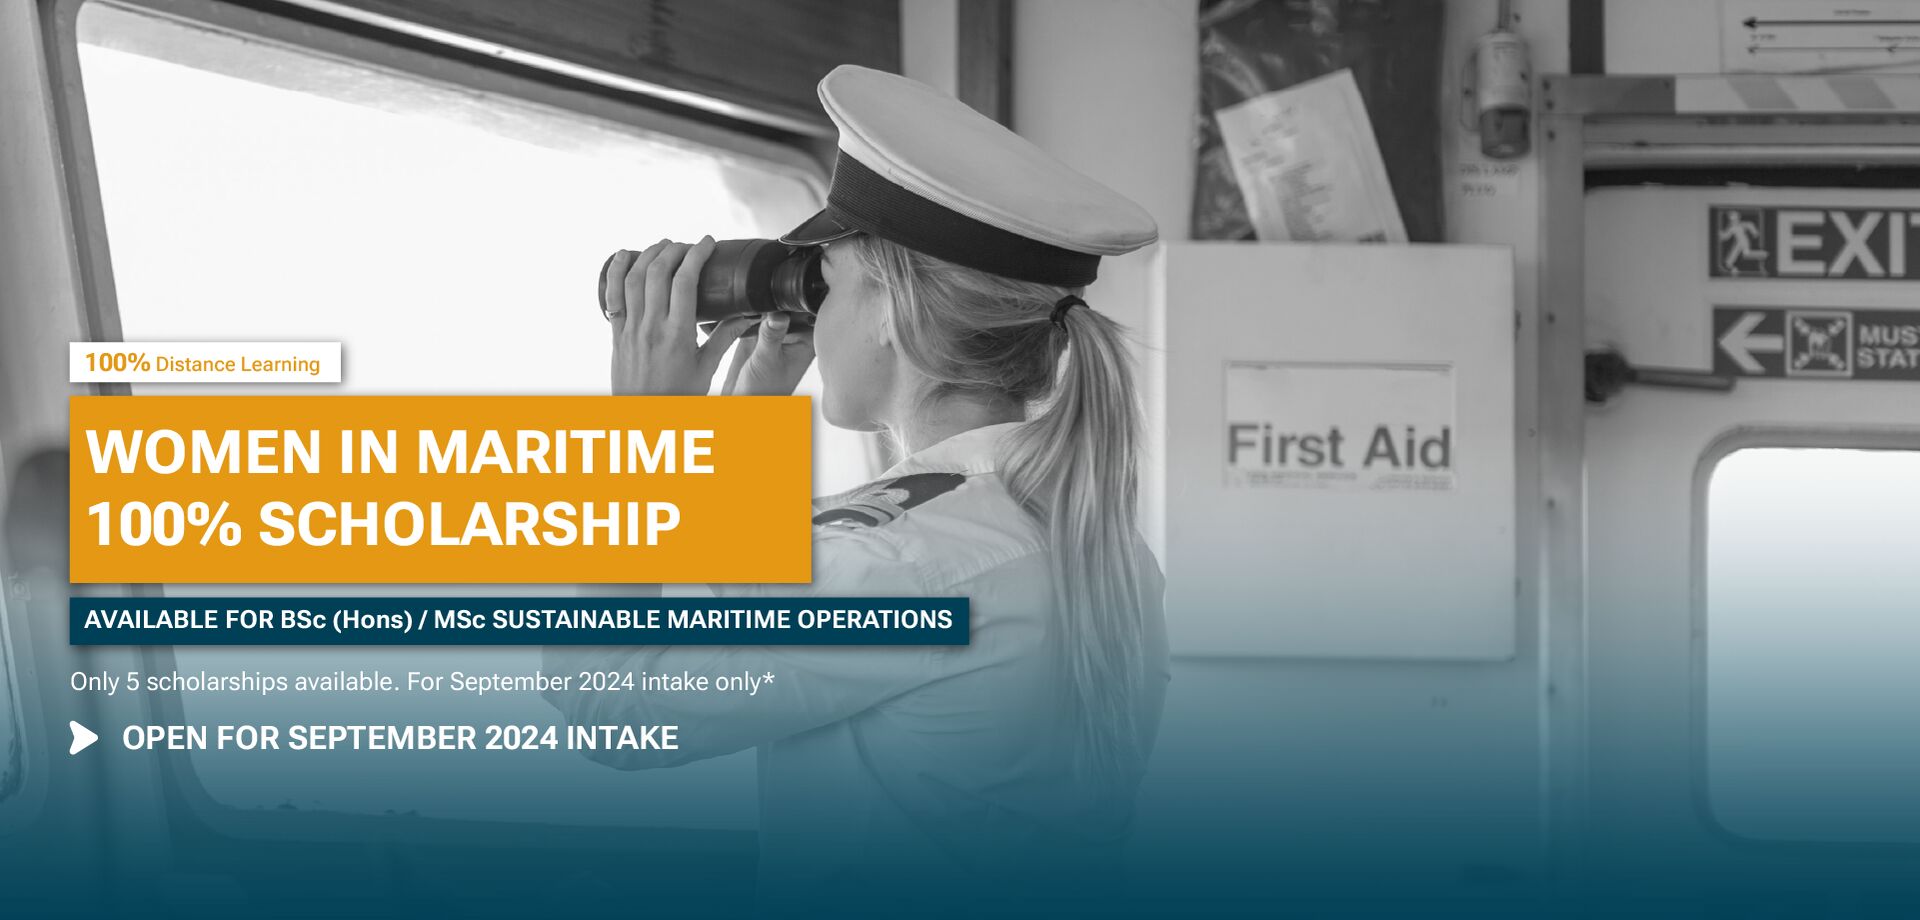 Women in Maritime 100% Scholarship